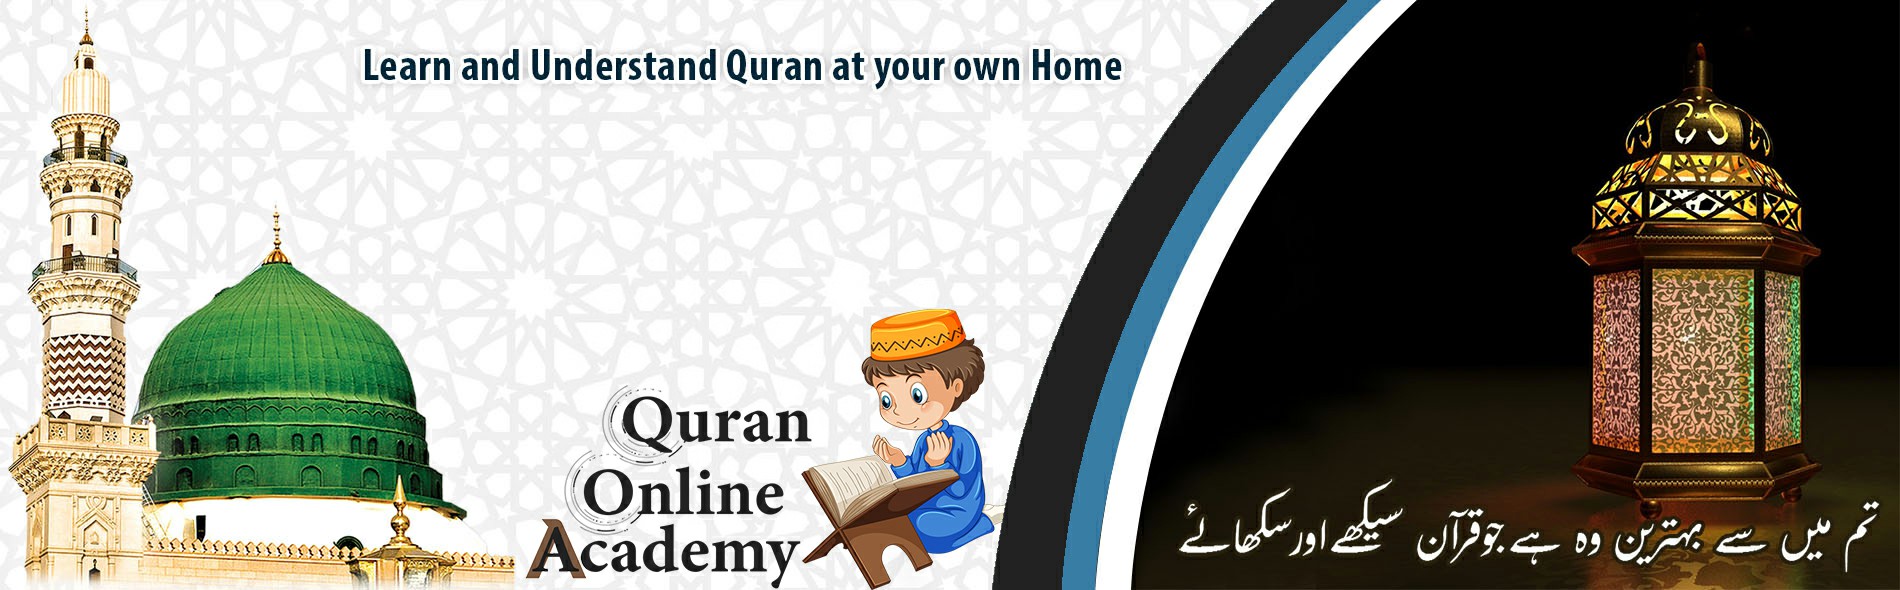 Quran Academy Near Me UK